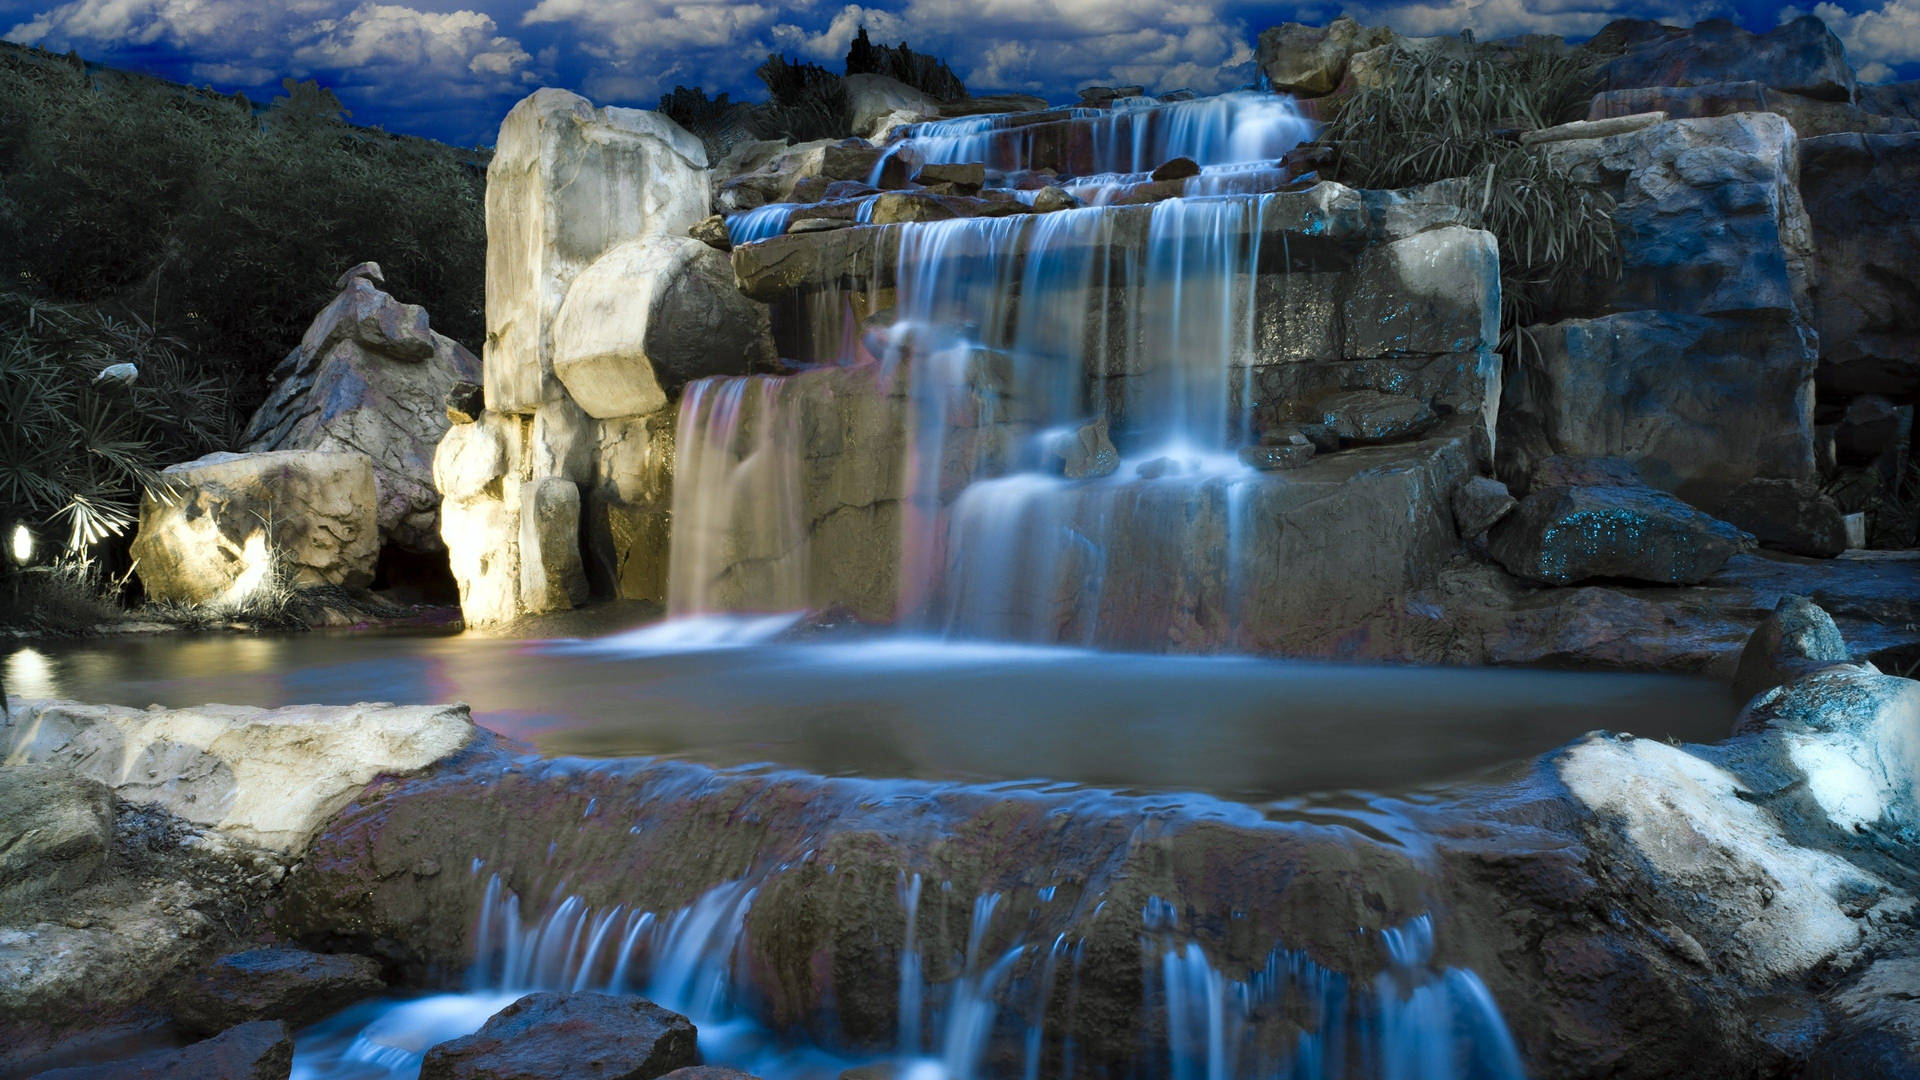 The wonders of nature in fantasy waterfall Wallpaper